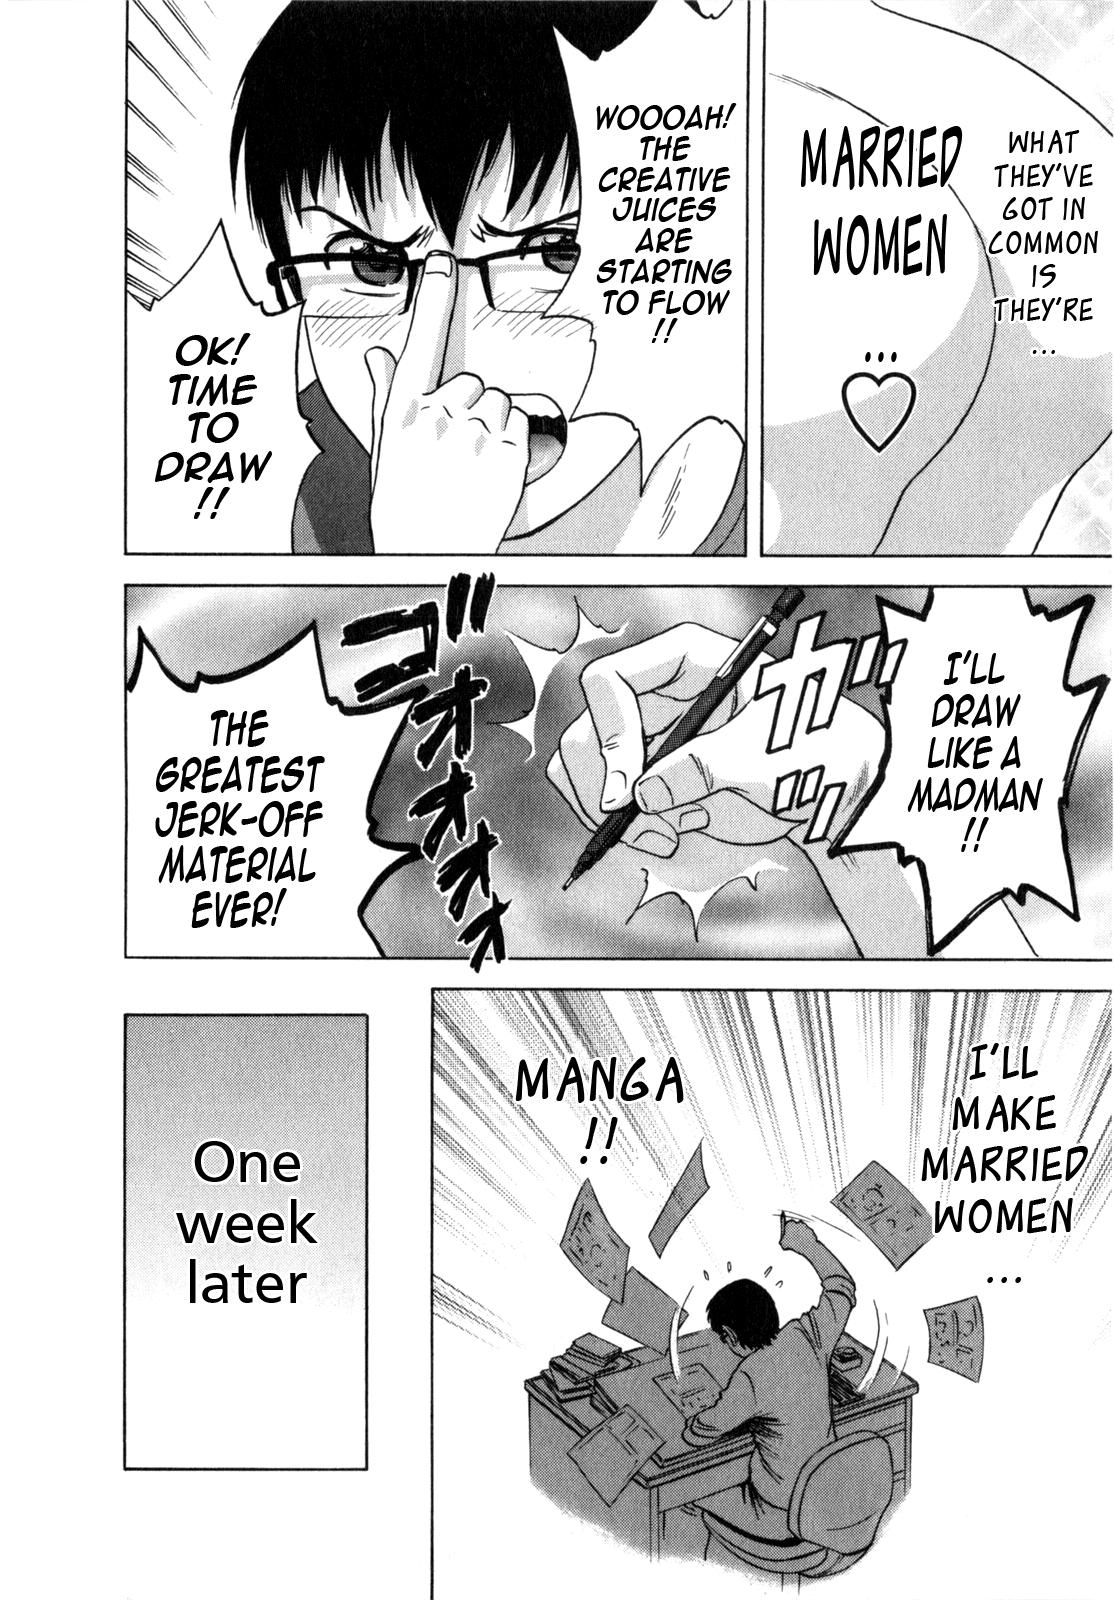 [Hidemaru] Life with Married Women Just Like a Manga 1 - Ch. 1-8 [English] {Tadanohito} 69